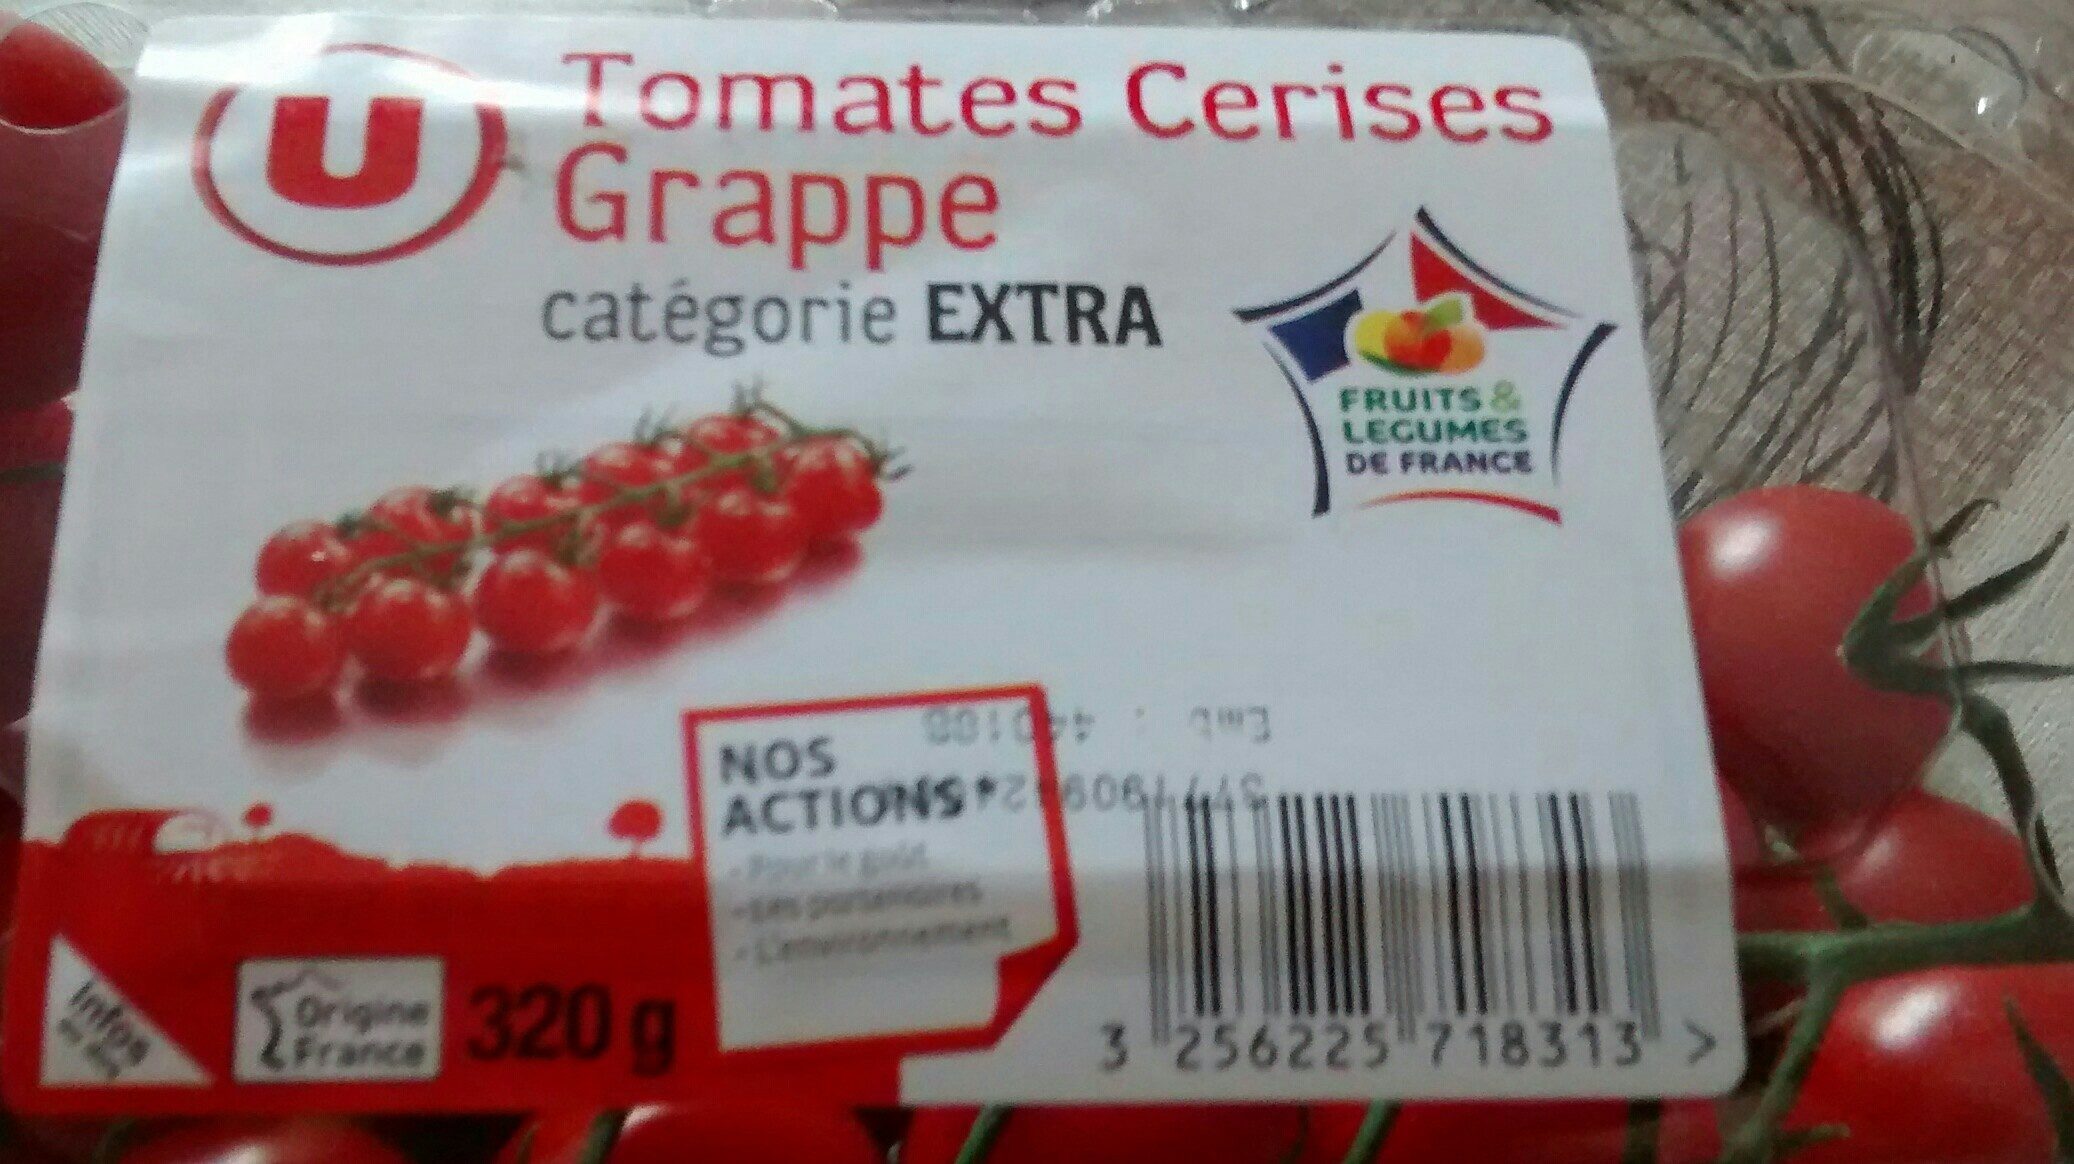 Tomate cerise en grappe, catégorie Extra - Ingredients - fr